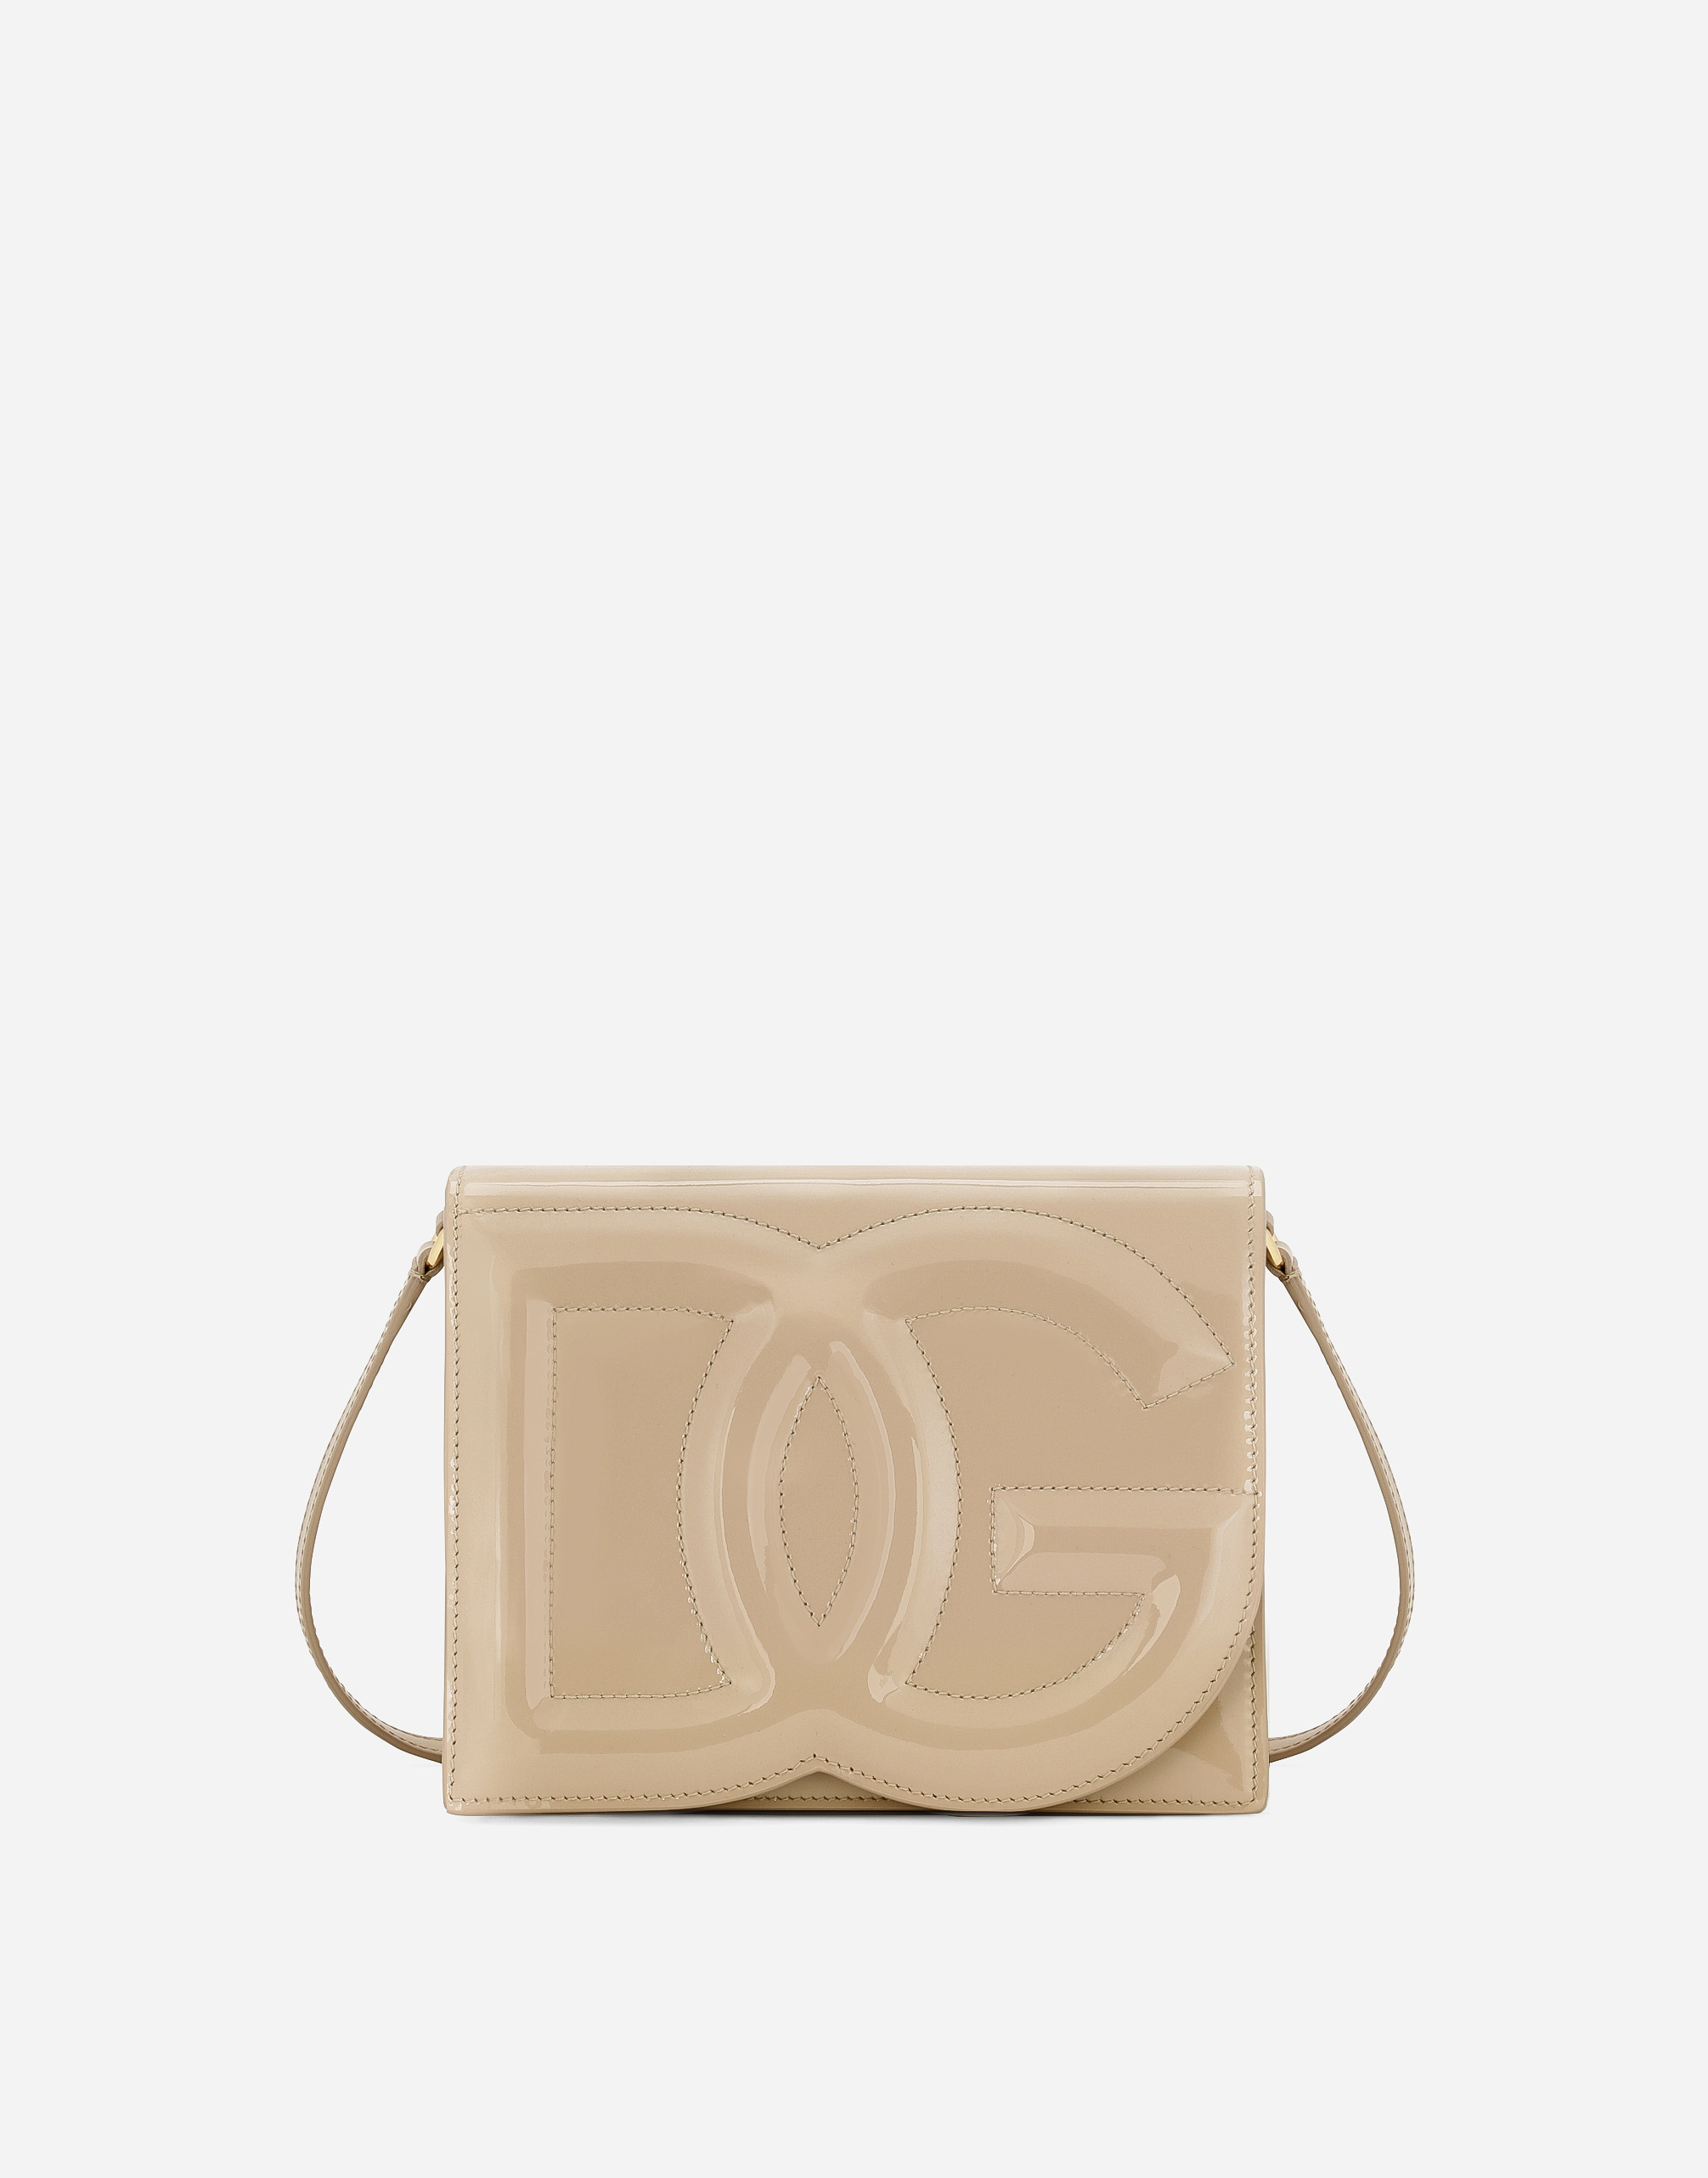 DG Logo crossbody bag in Beige for Women | Dolce&Gabbana®